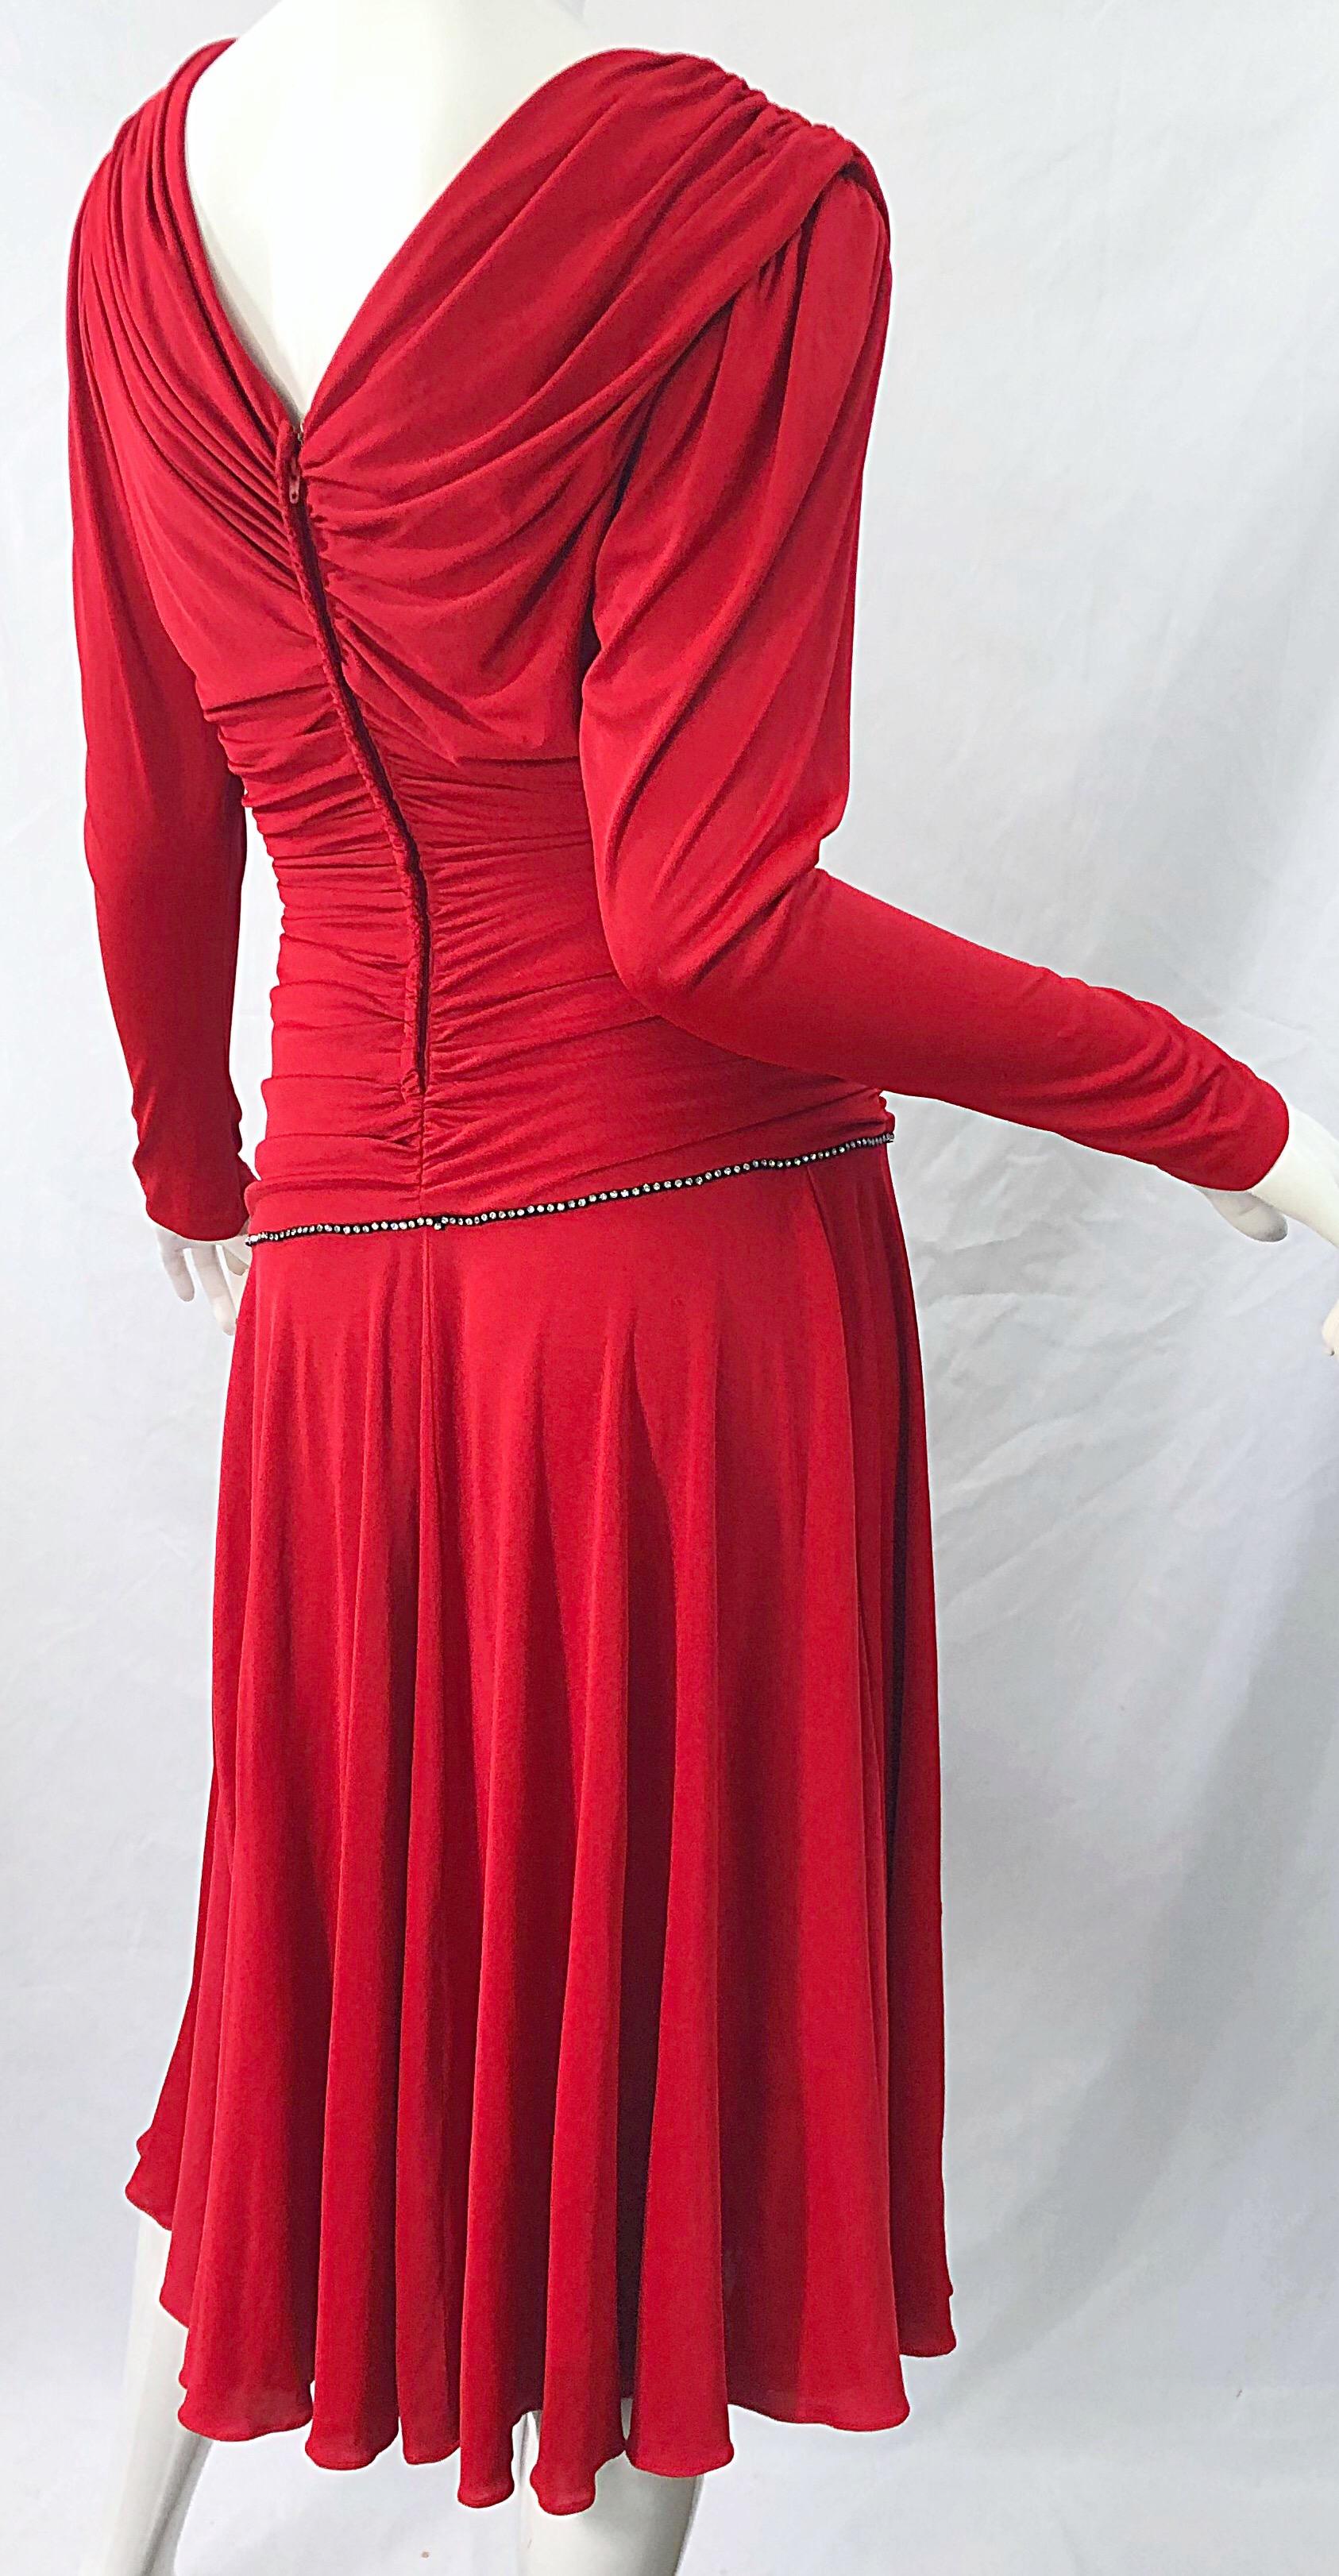 1970s Claraluna Original Lipstick Red Rhinestone Slinky Jersey Vintage 70s Dress For Sale 3